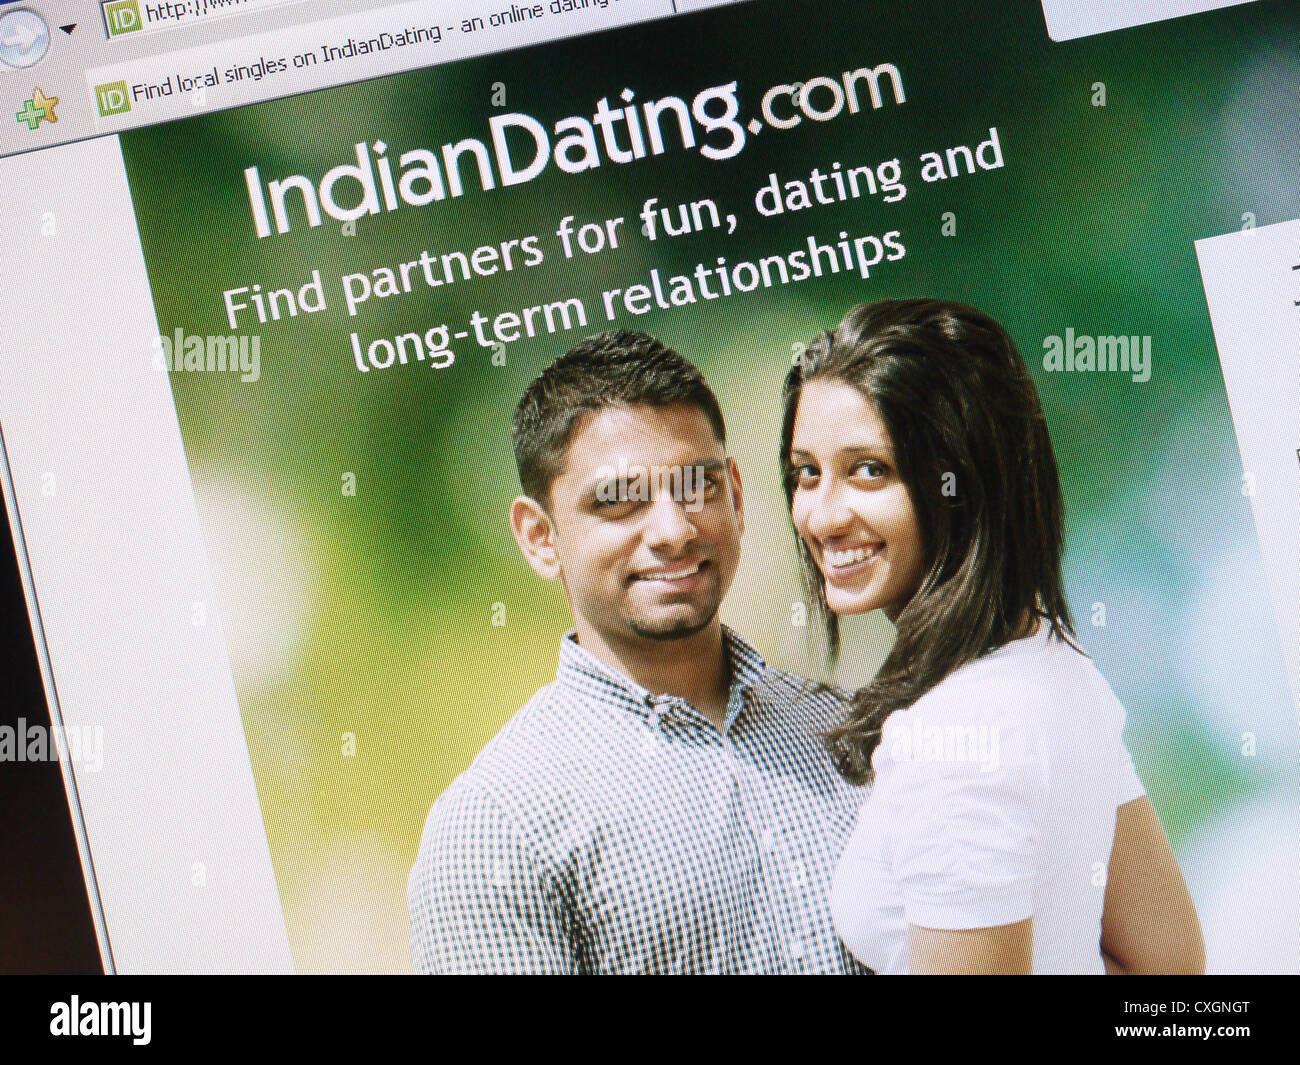 emne tittel for online dating